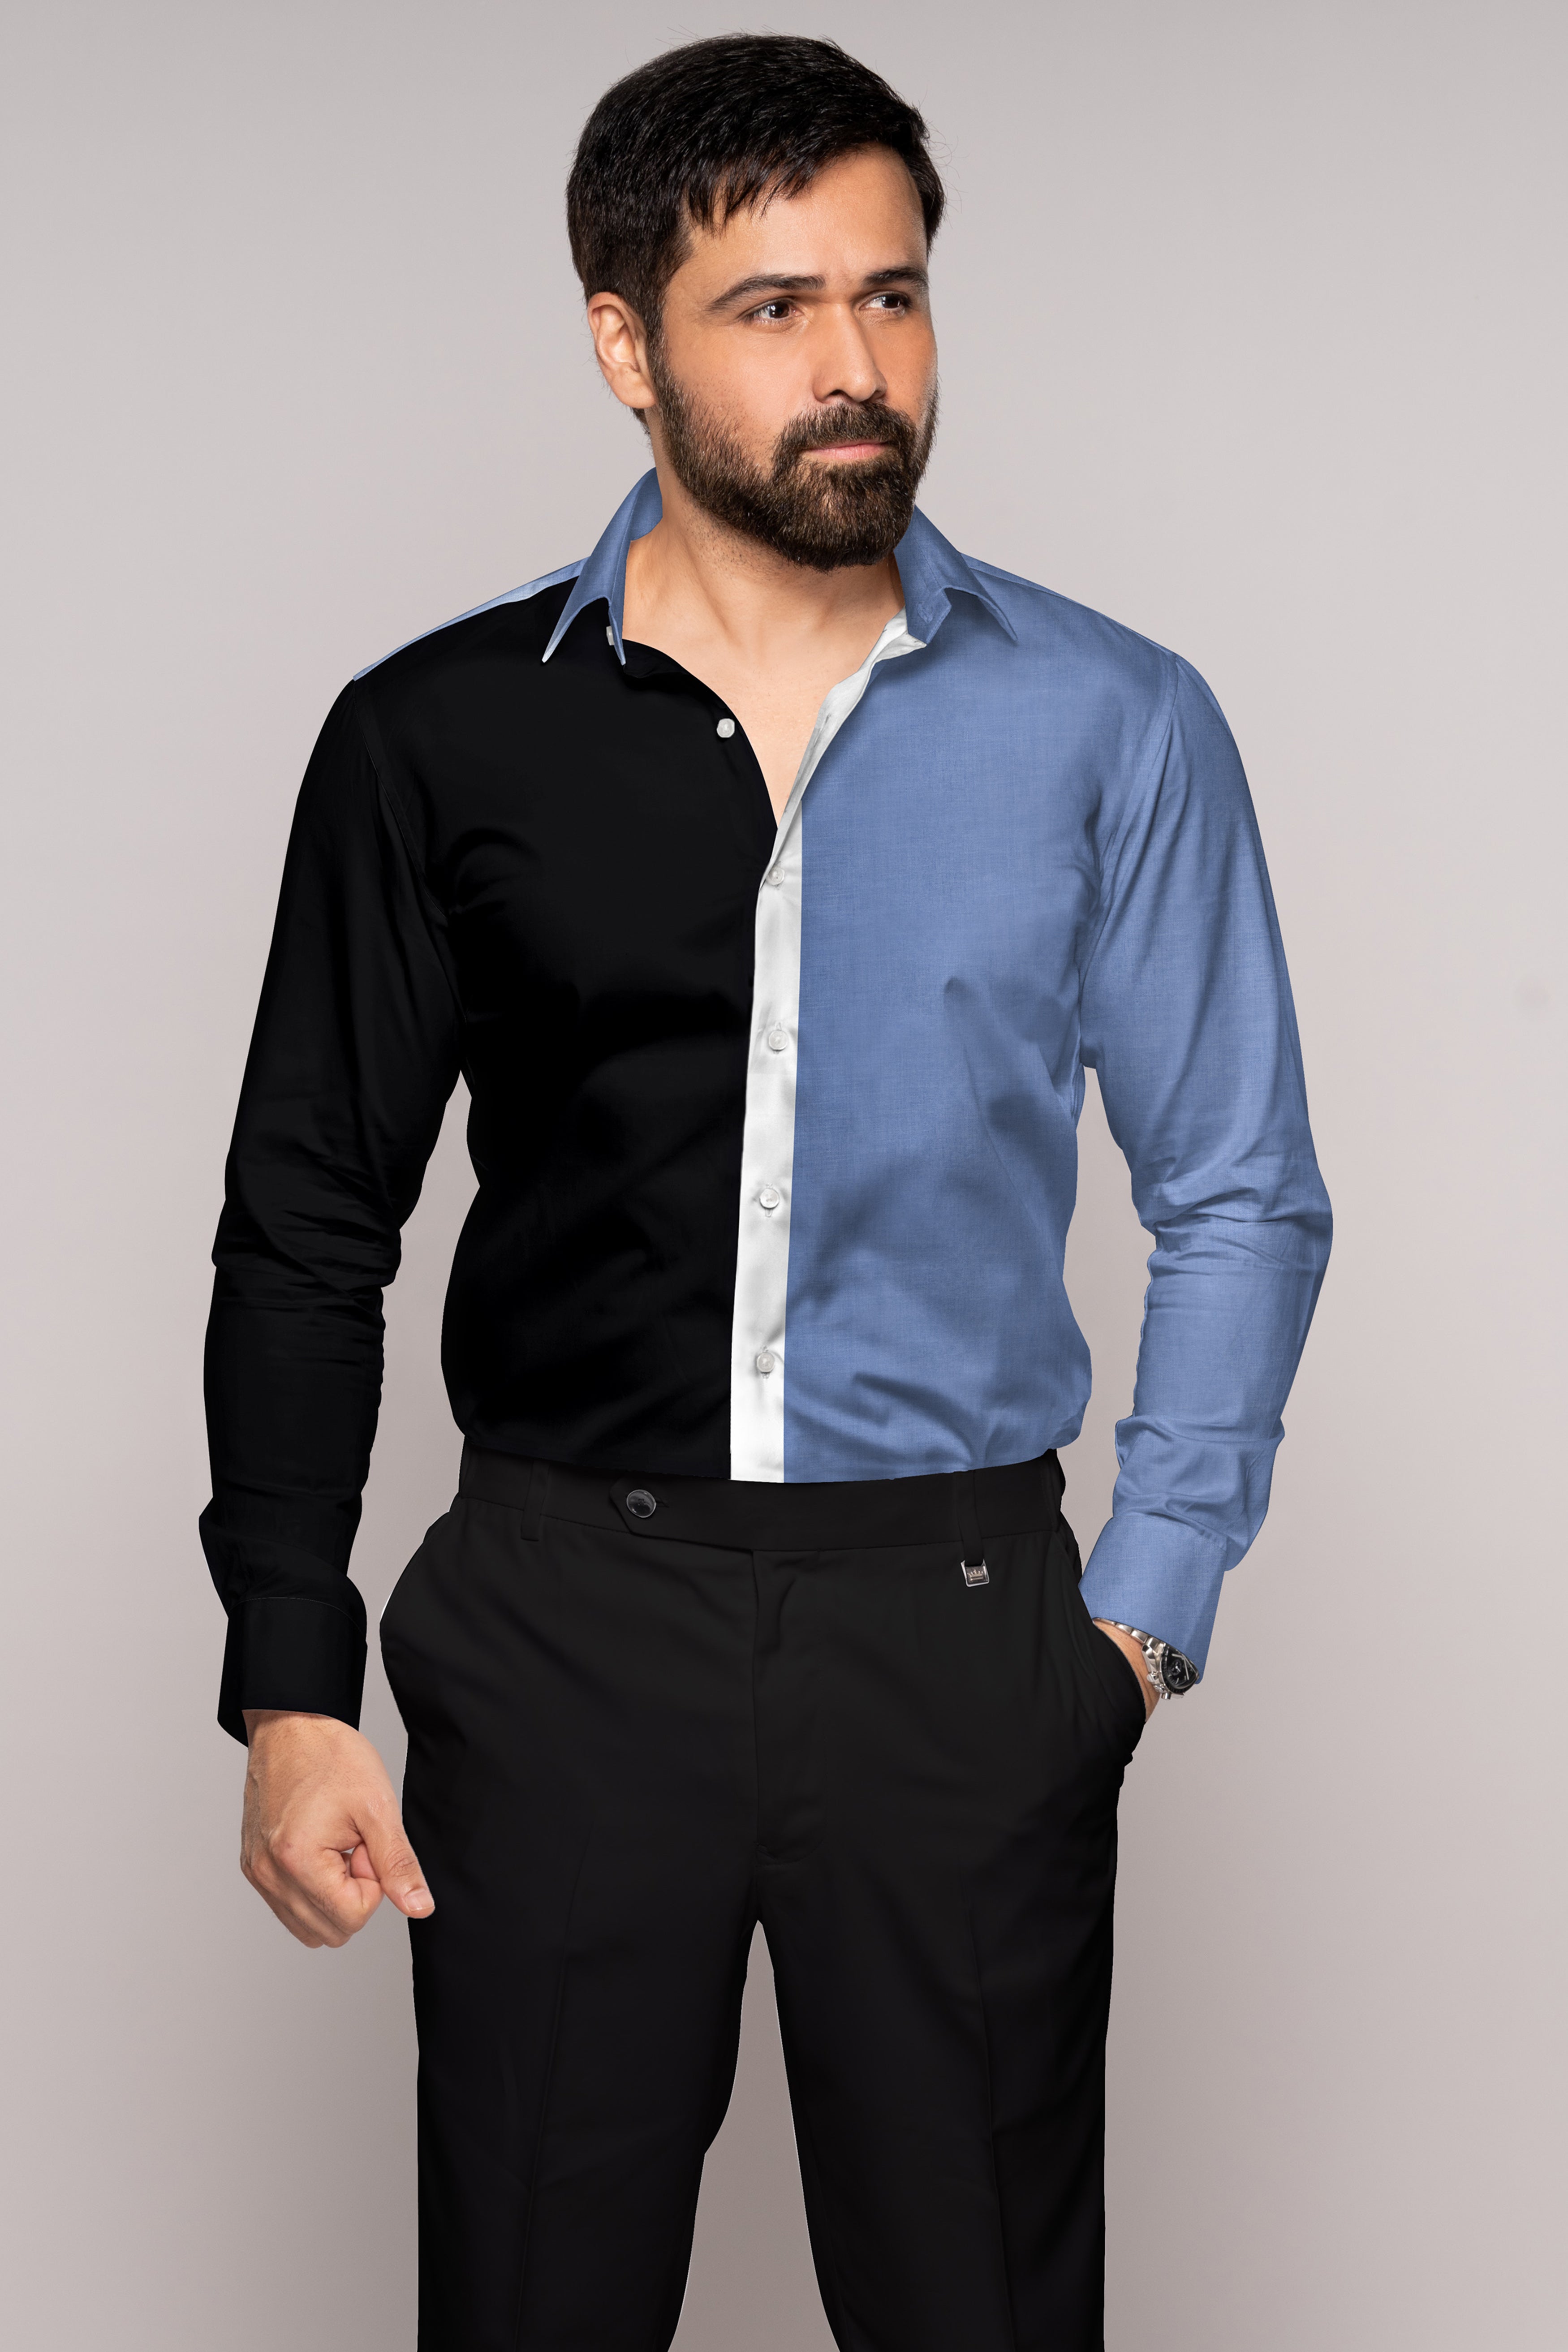 Yonder Blue with Black and White Premium Cotton Designer Shirt